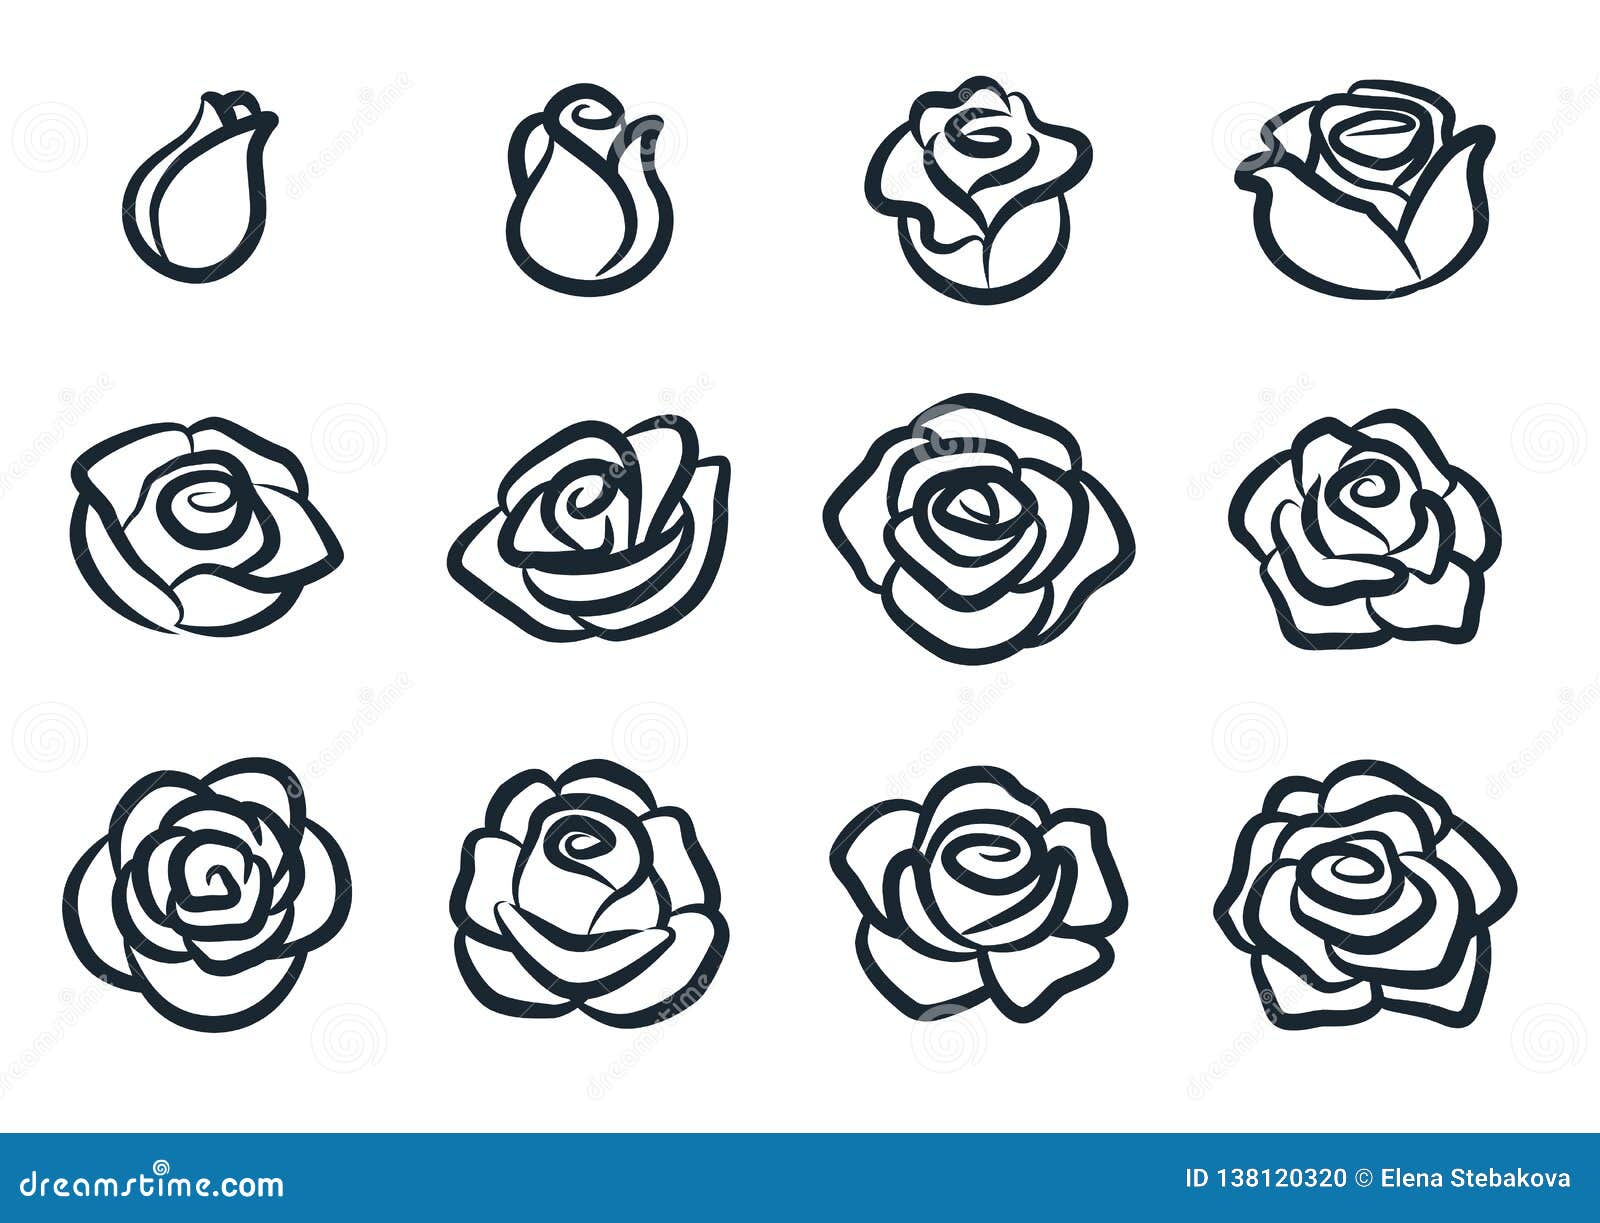 Black and White Rose Flower Vector Illustration. Simple Rose ...